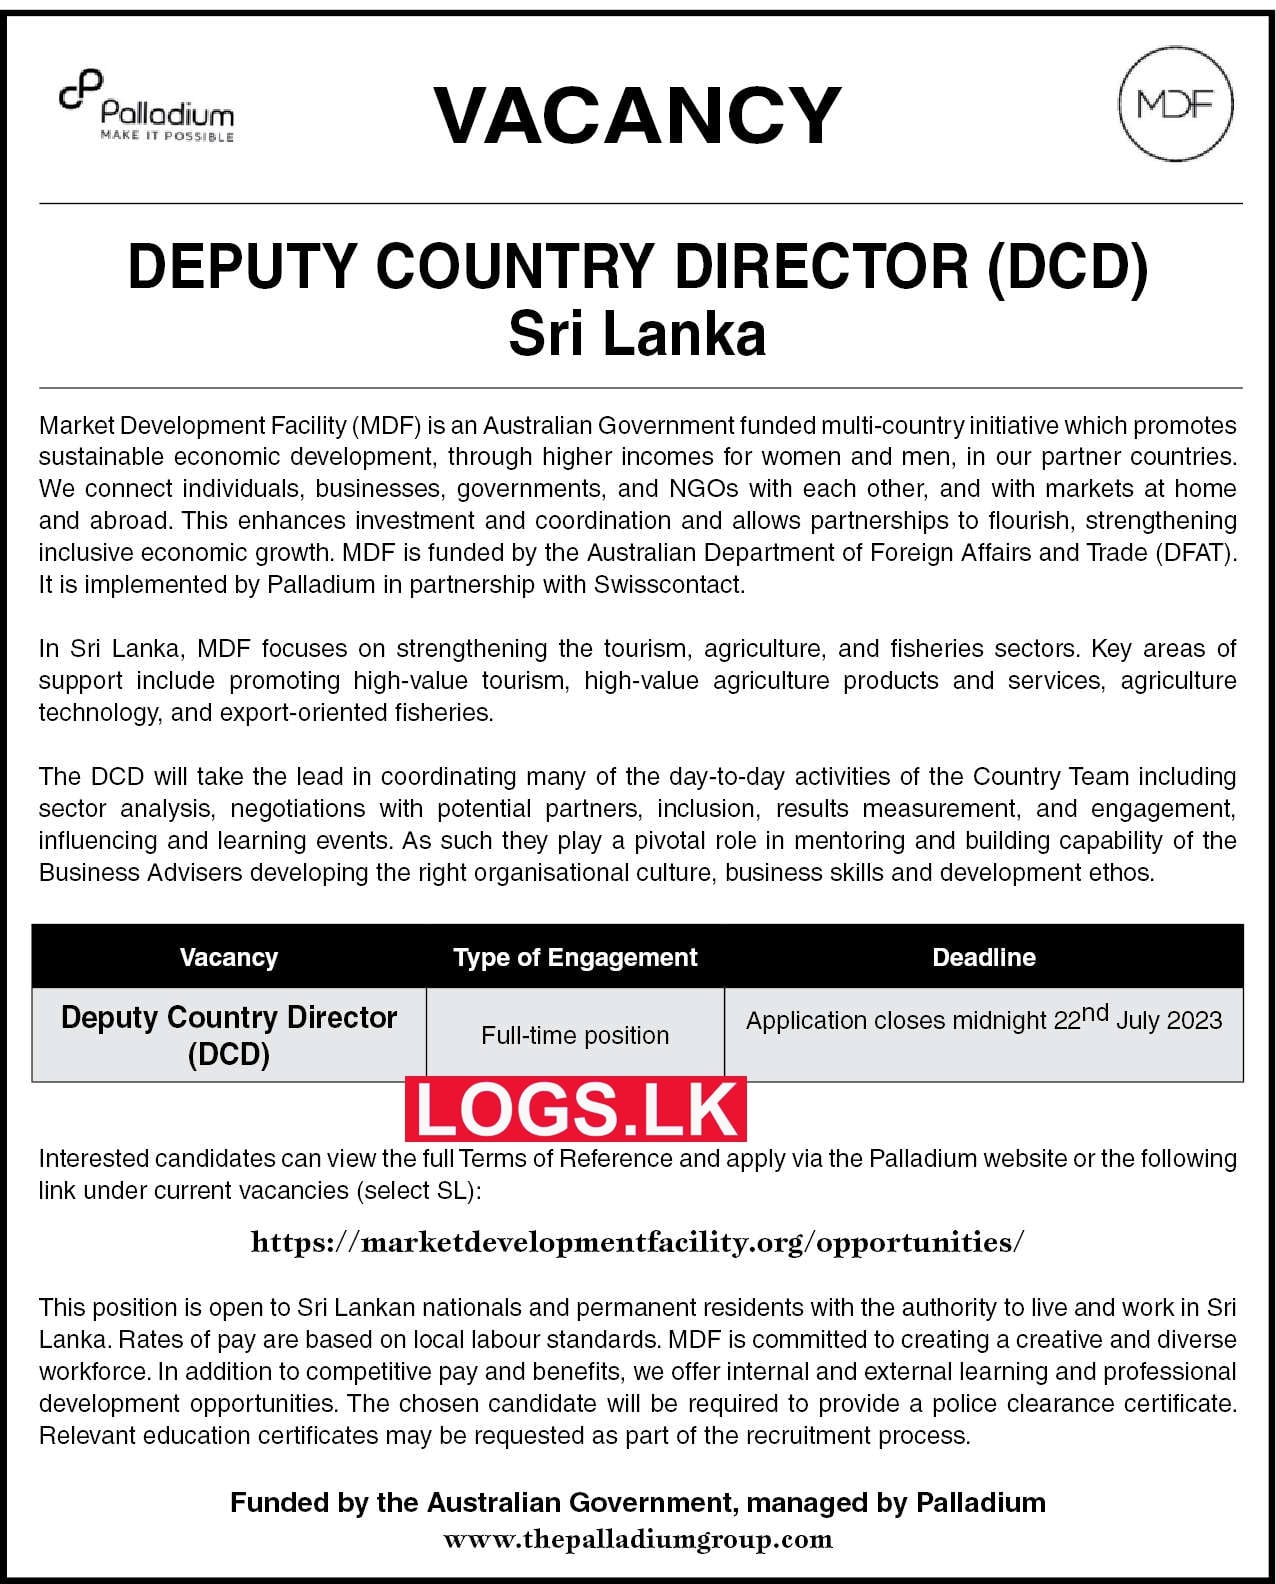 Deputy Country Director Vacancy at Market Development Facility Job Vacancies